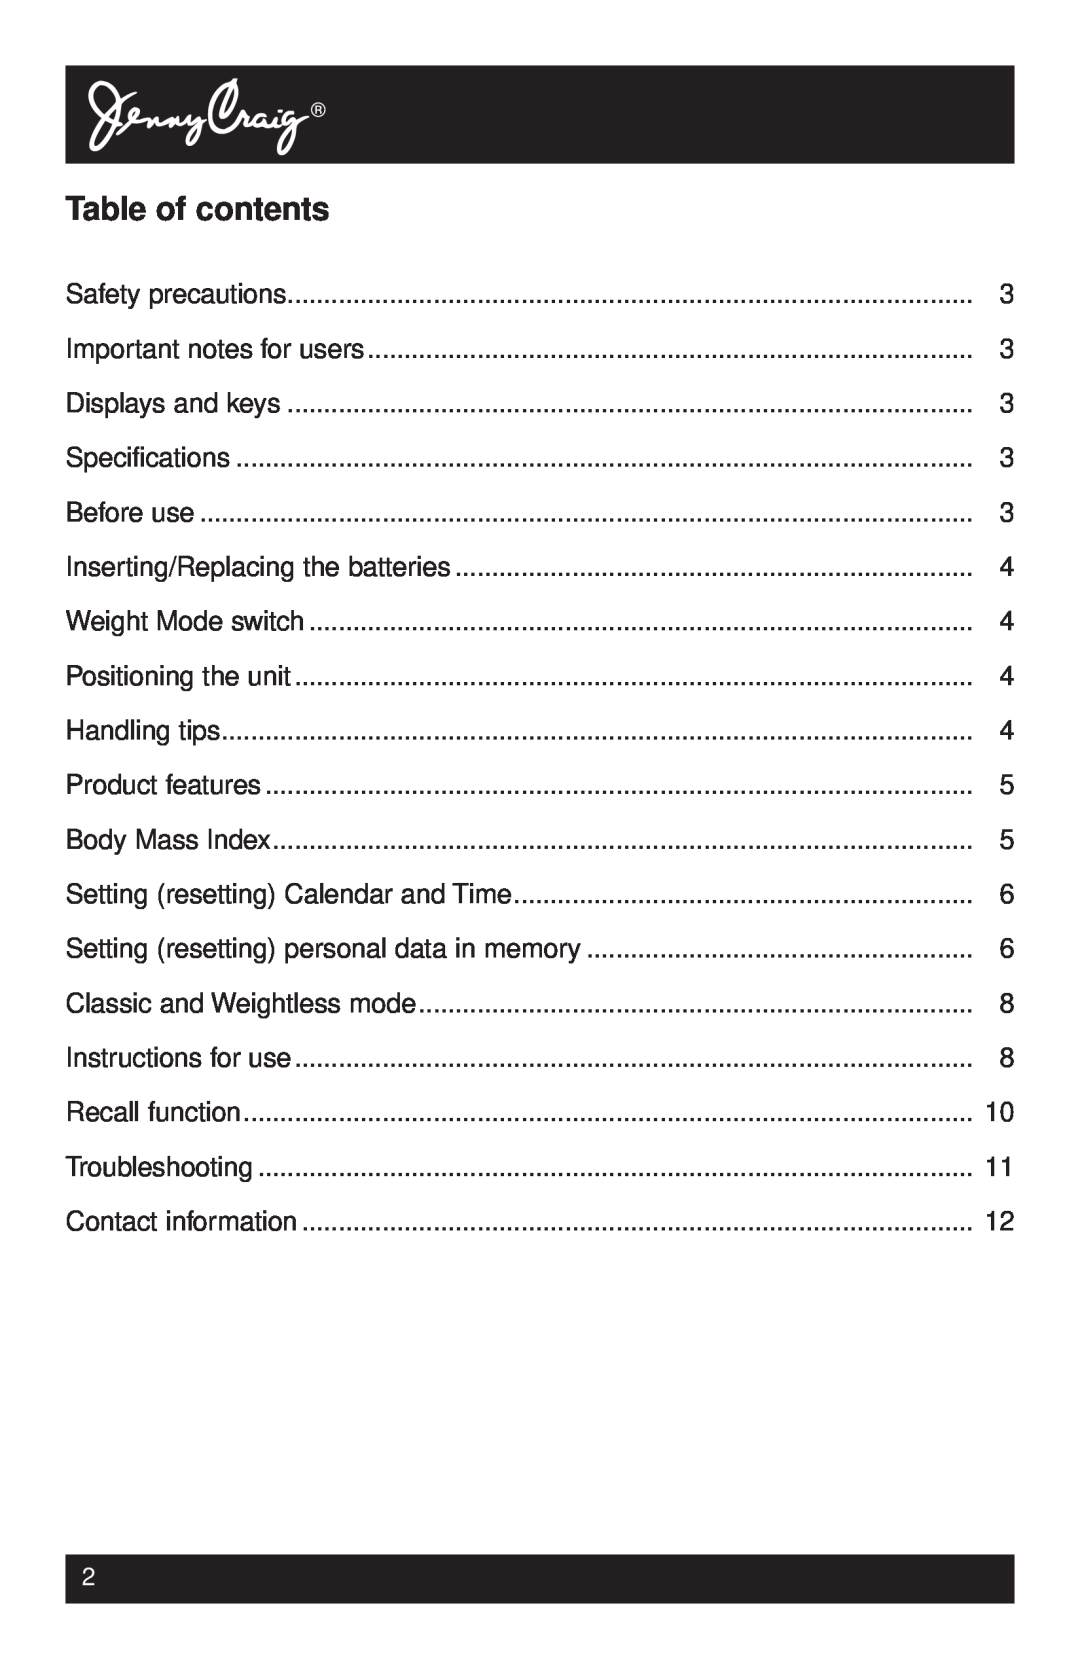 Tanita HD-340 instruction manual Table of contents 